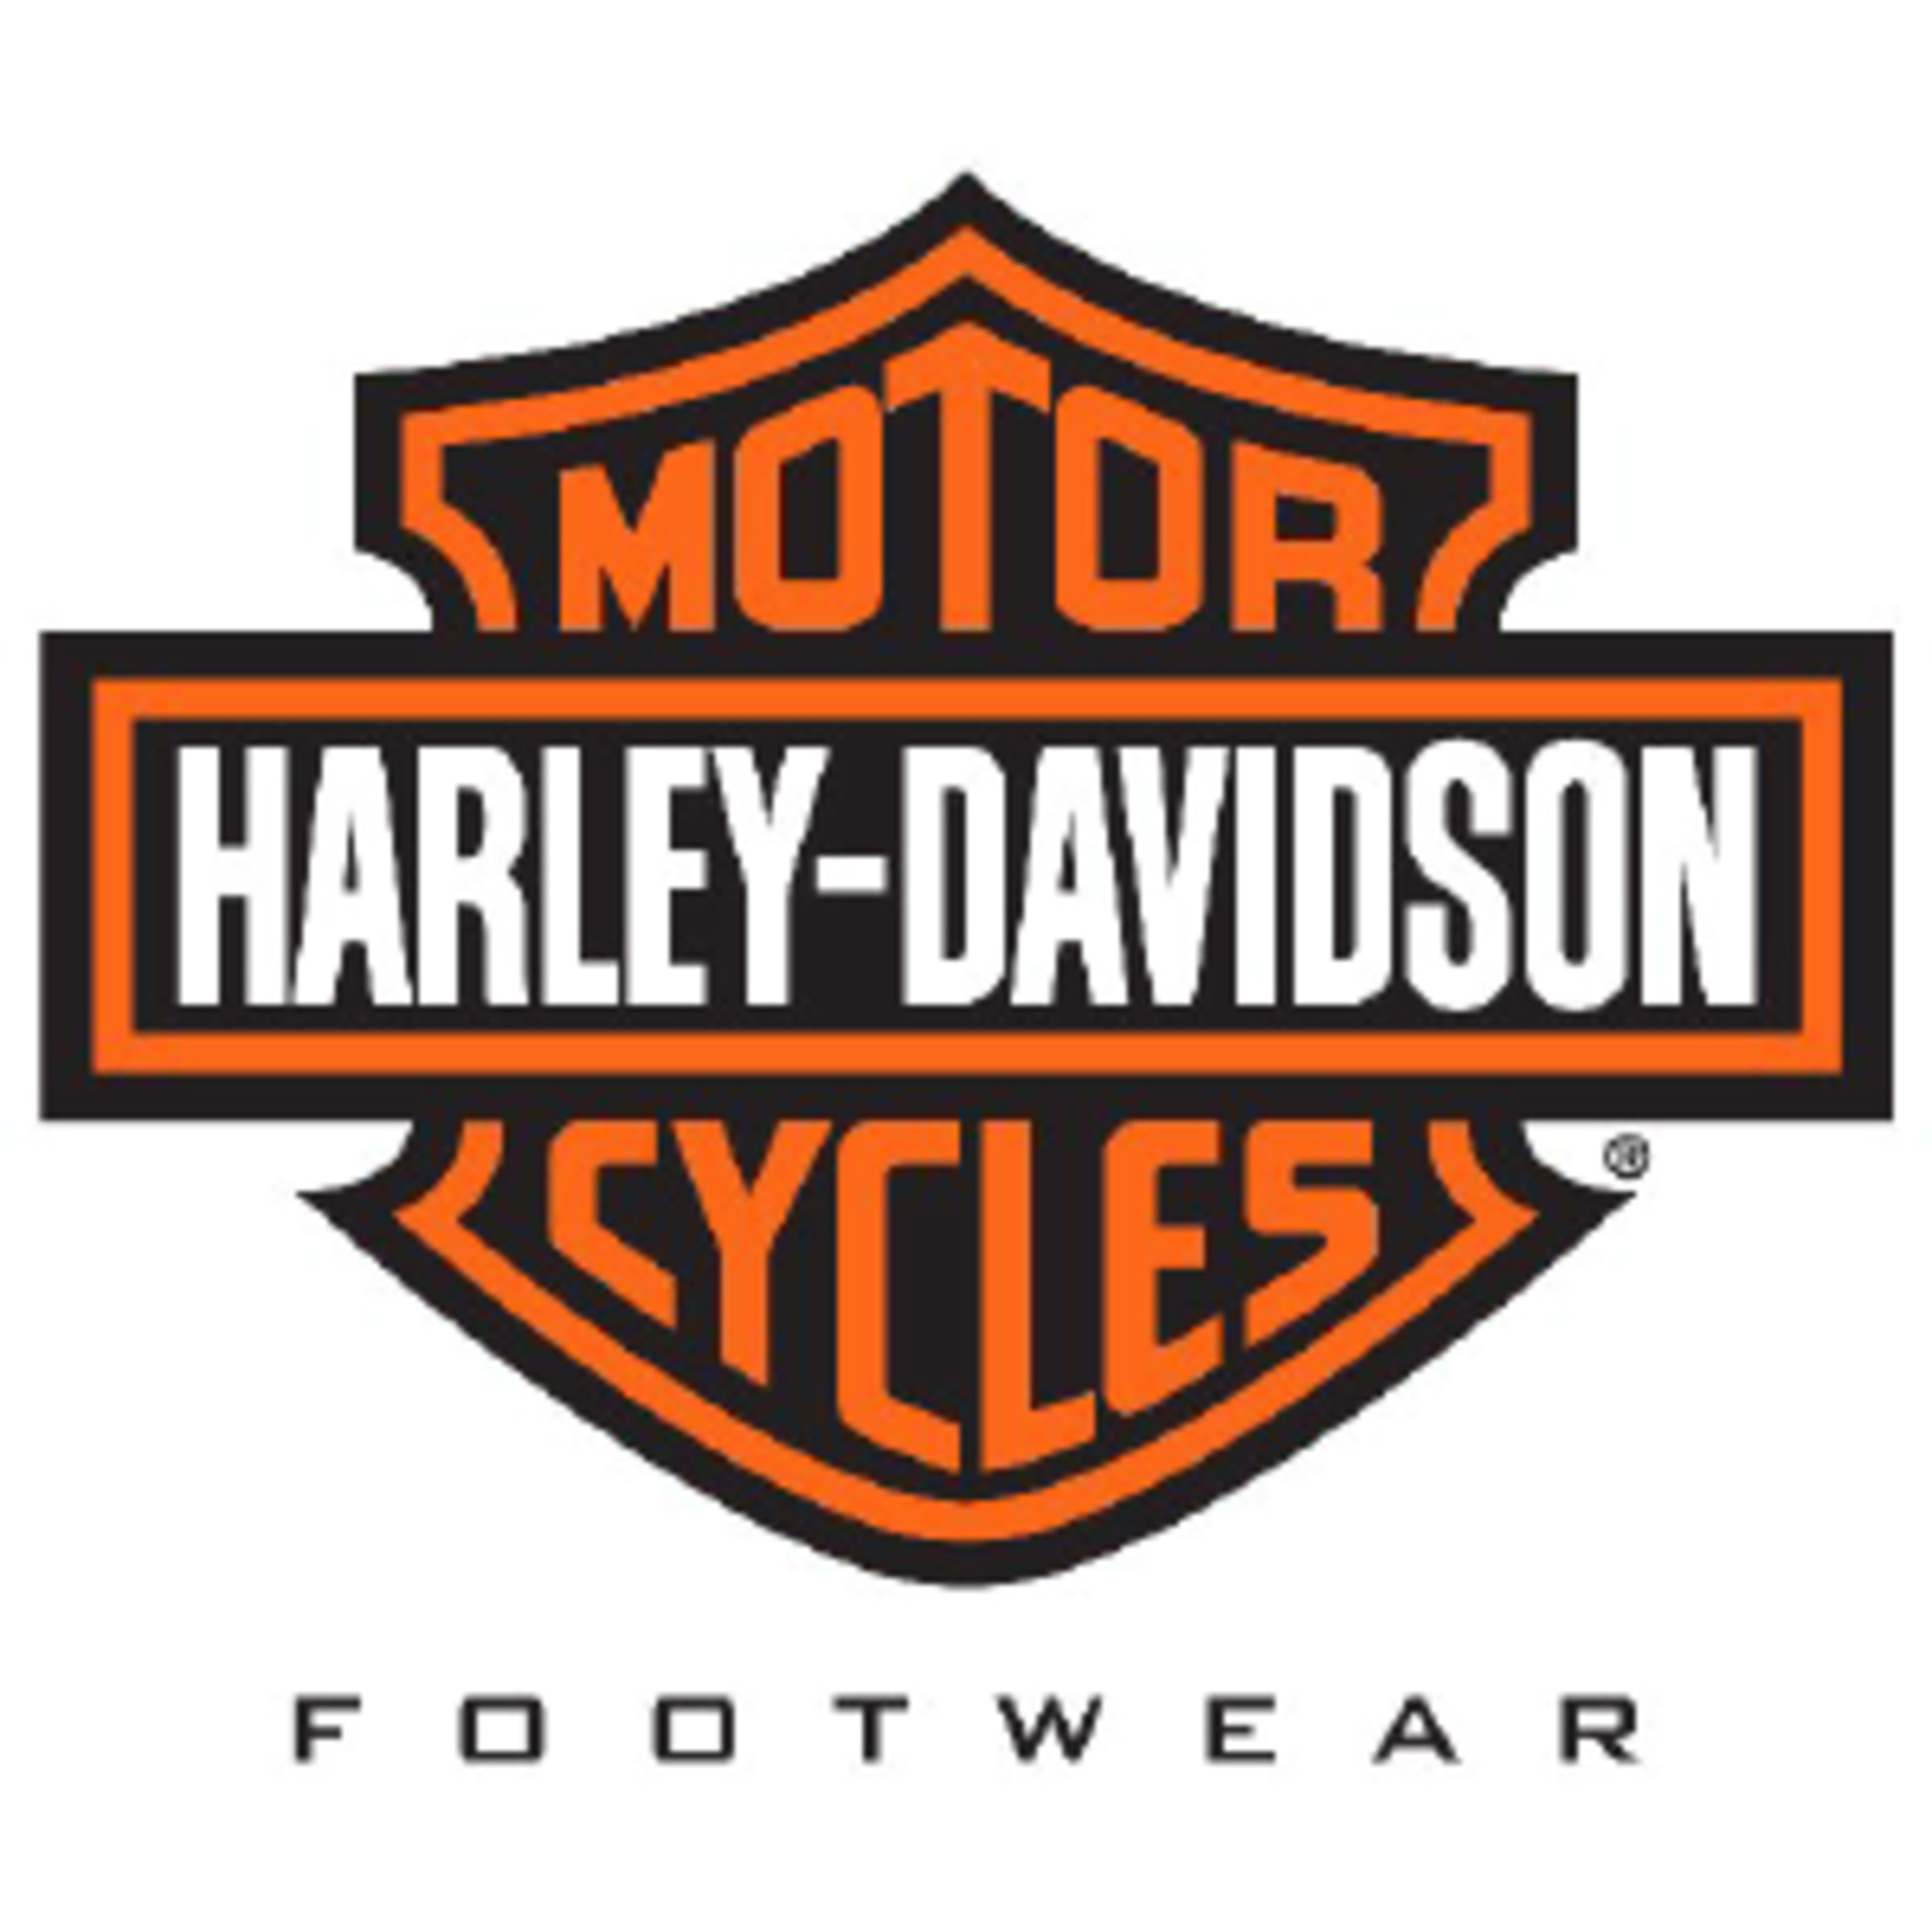 Harley Davidson Footwear Code